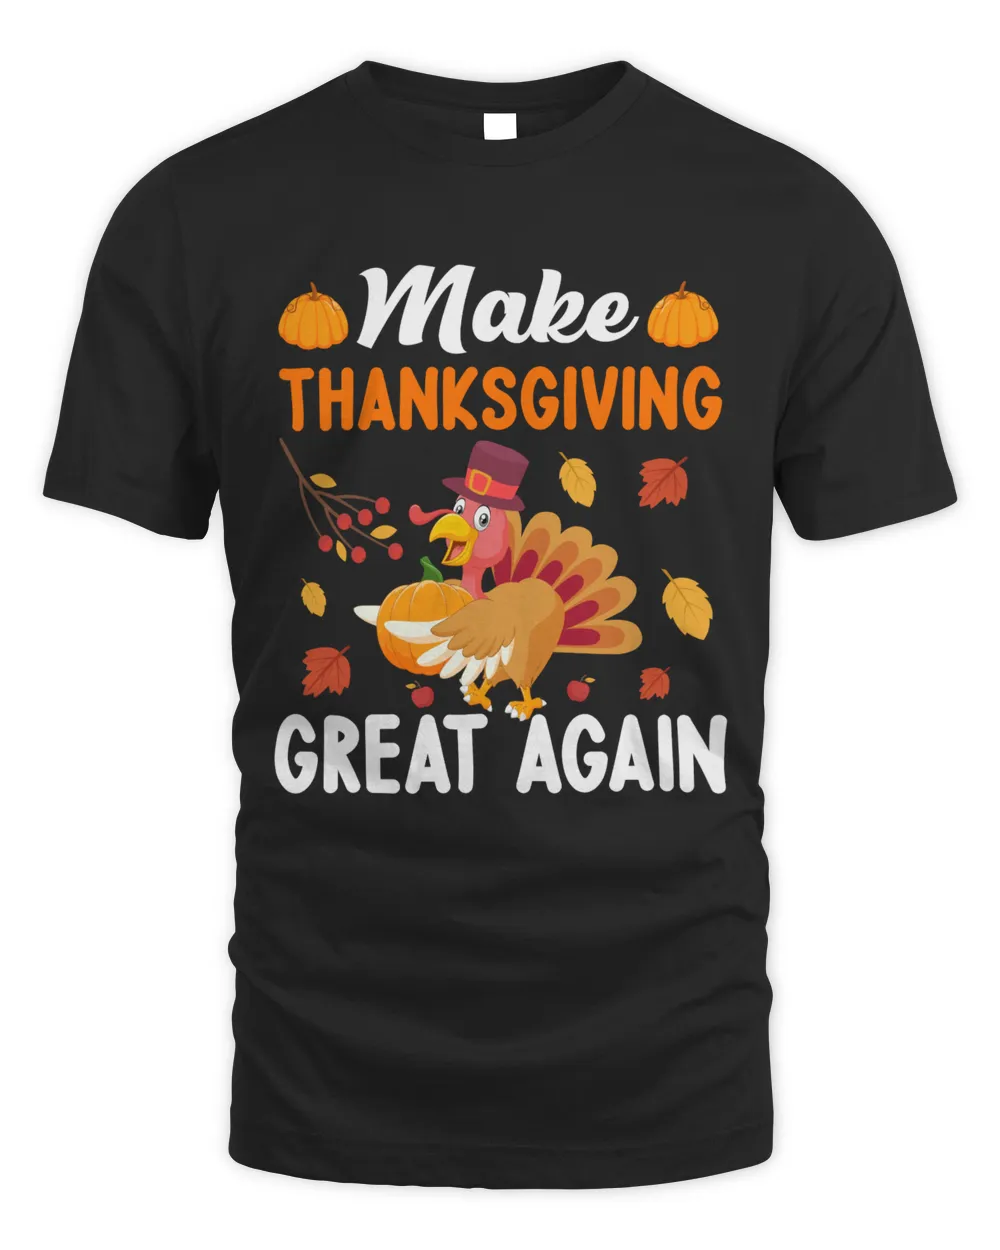 Make thanksgiving great again